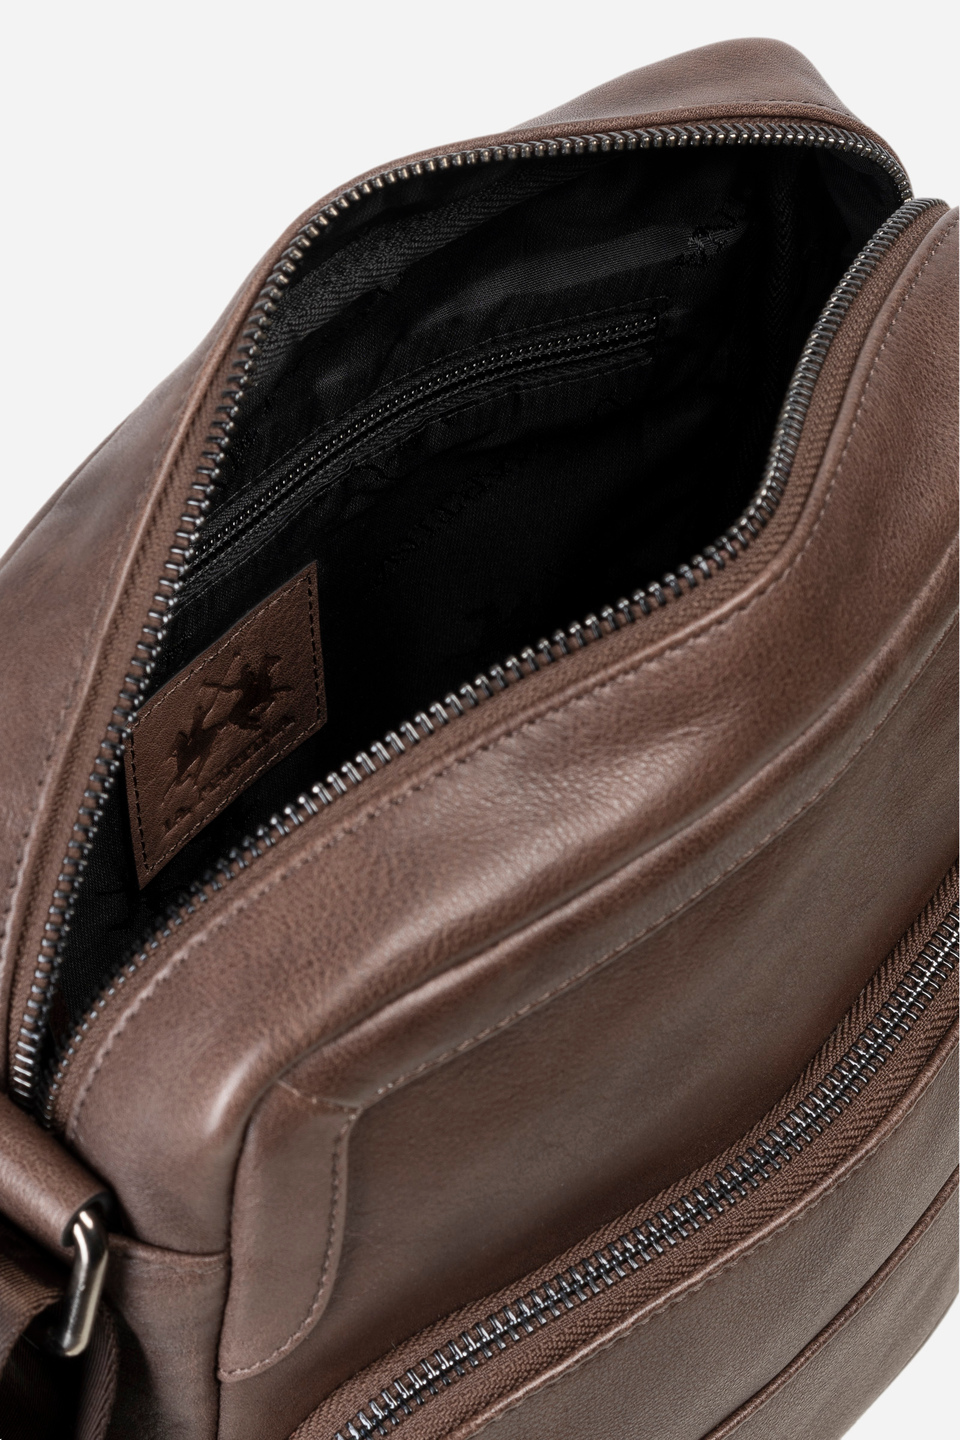 Men's leather bodybag - Miguel | La Martina - Official Online Shop